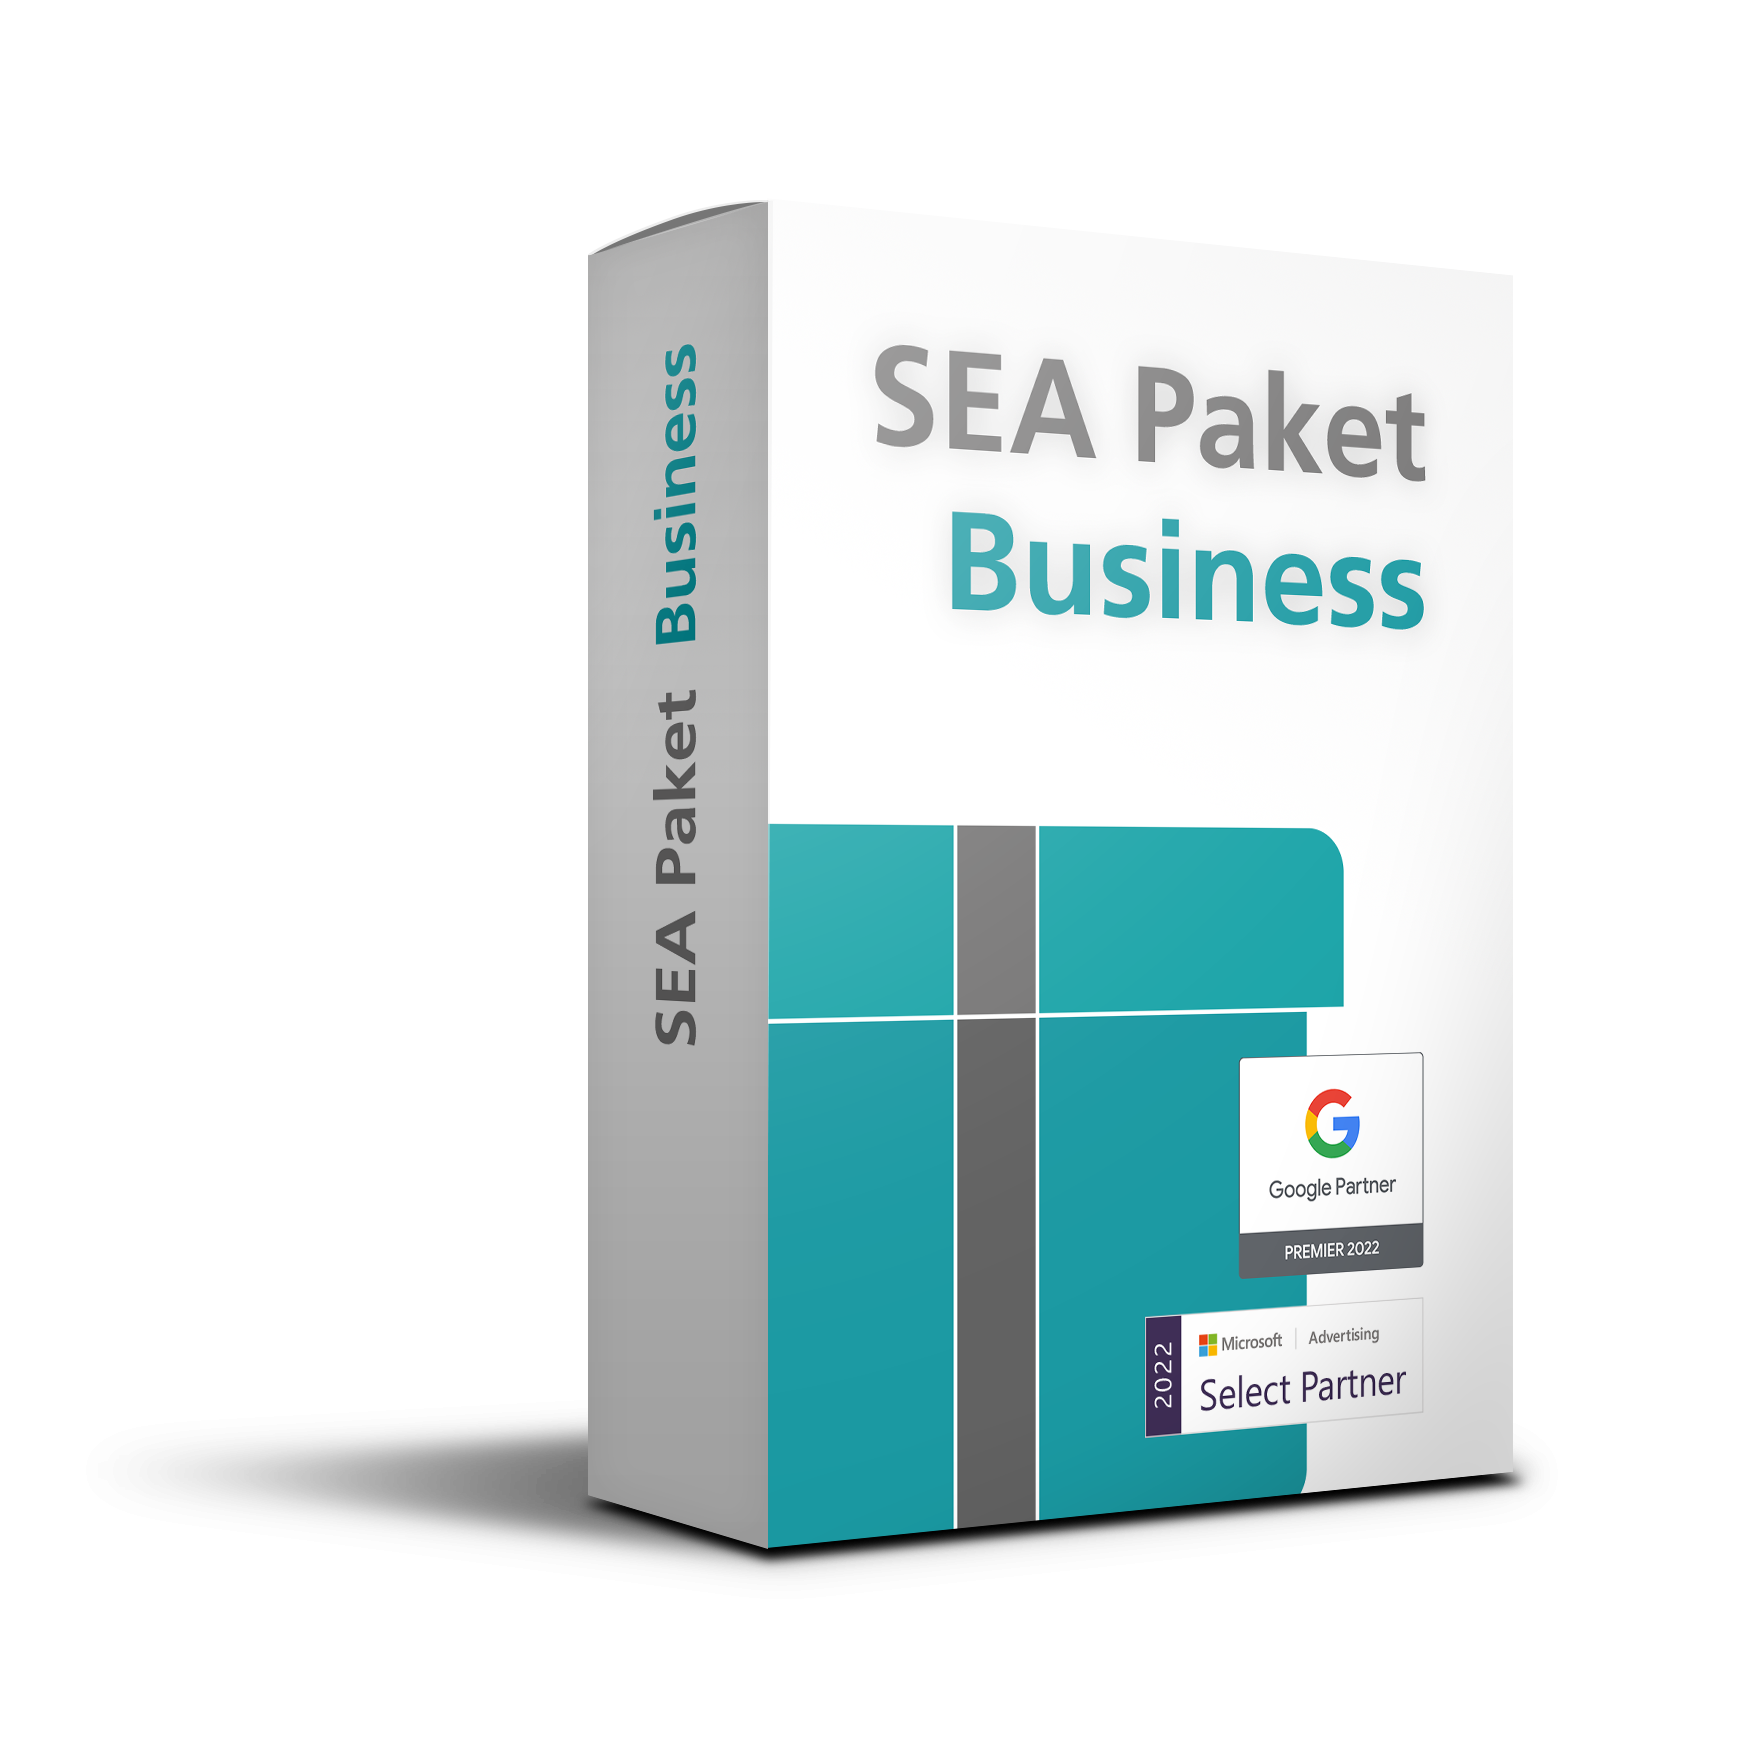 Suchmaschinenwerbung SEA Paket Business